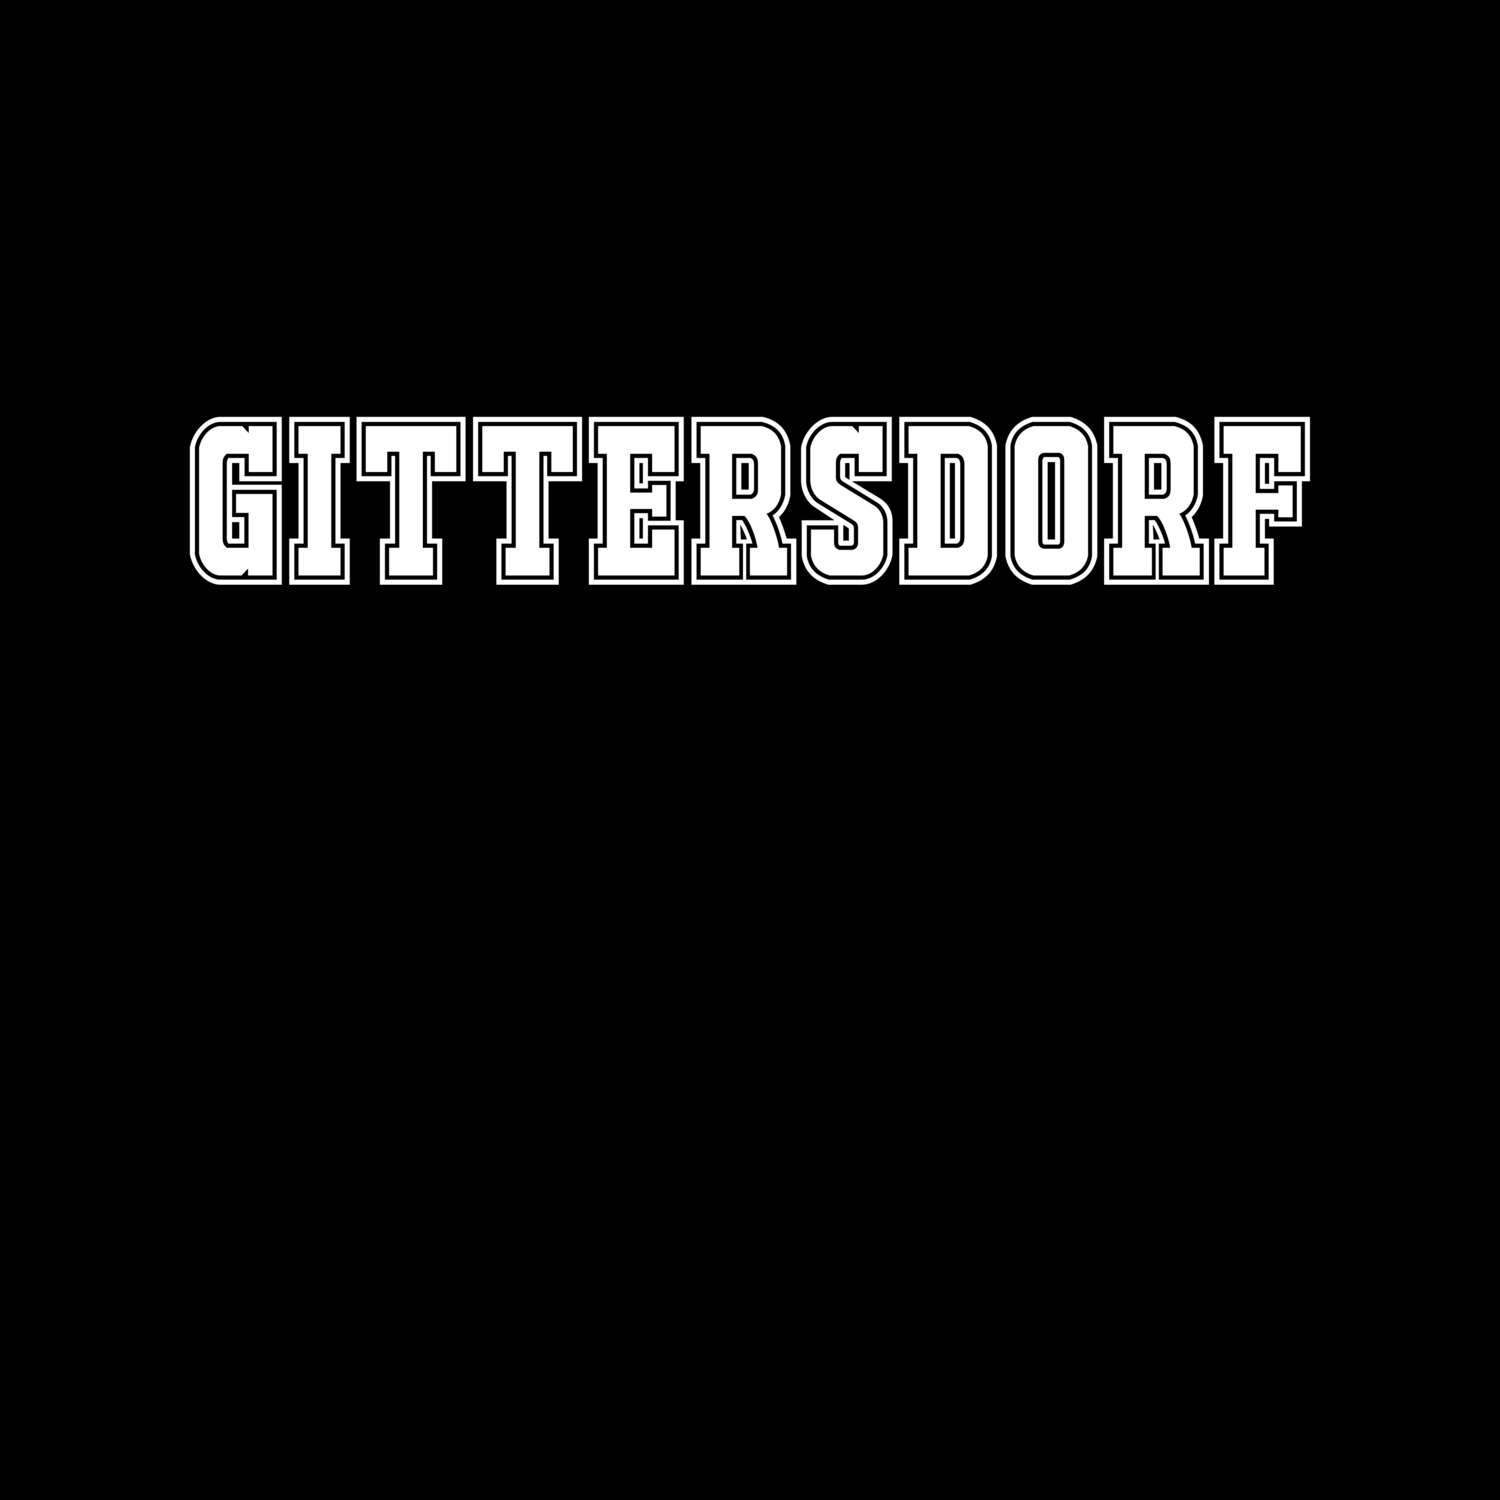 Gittersdorf T-Shirt »Classic«